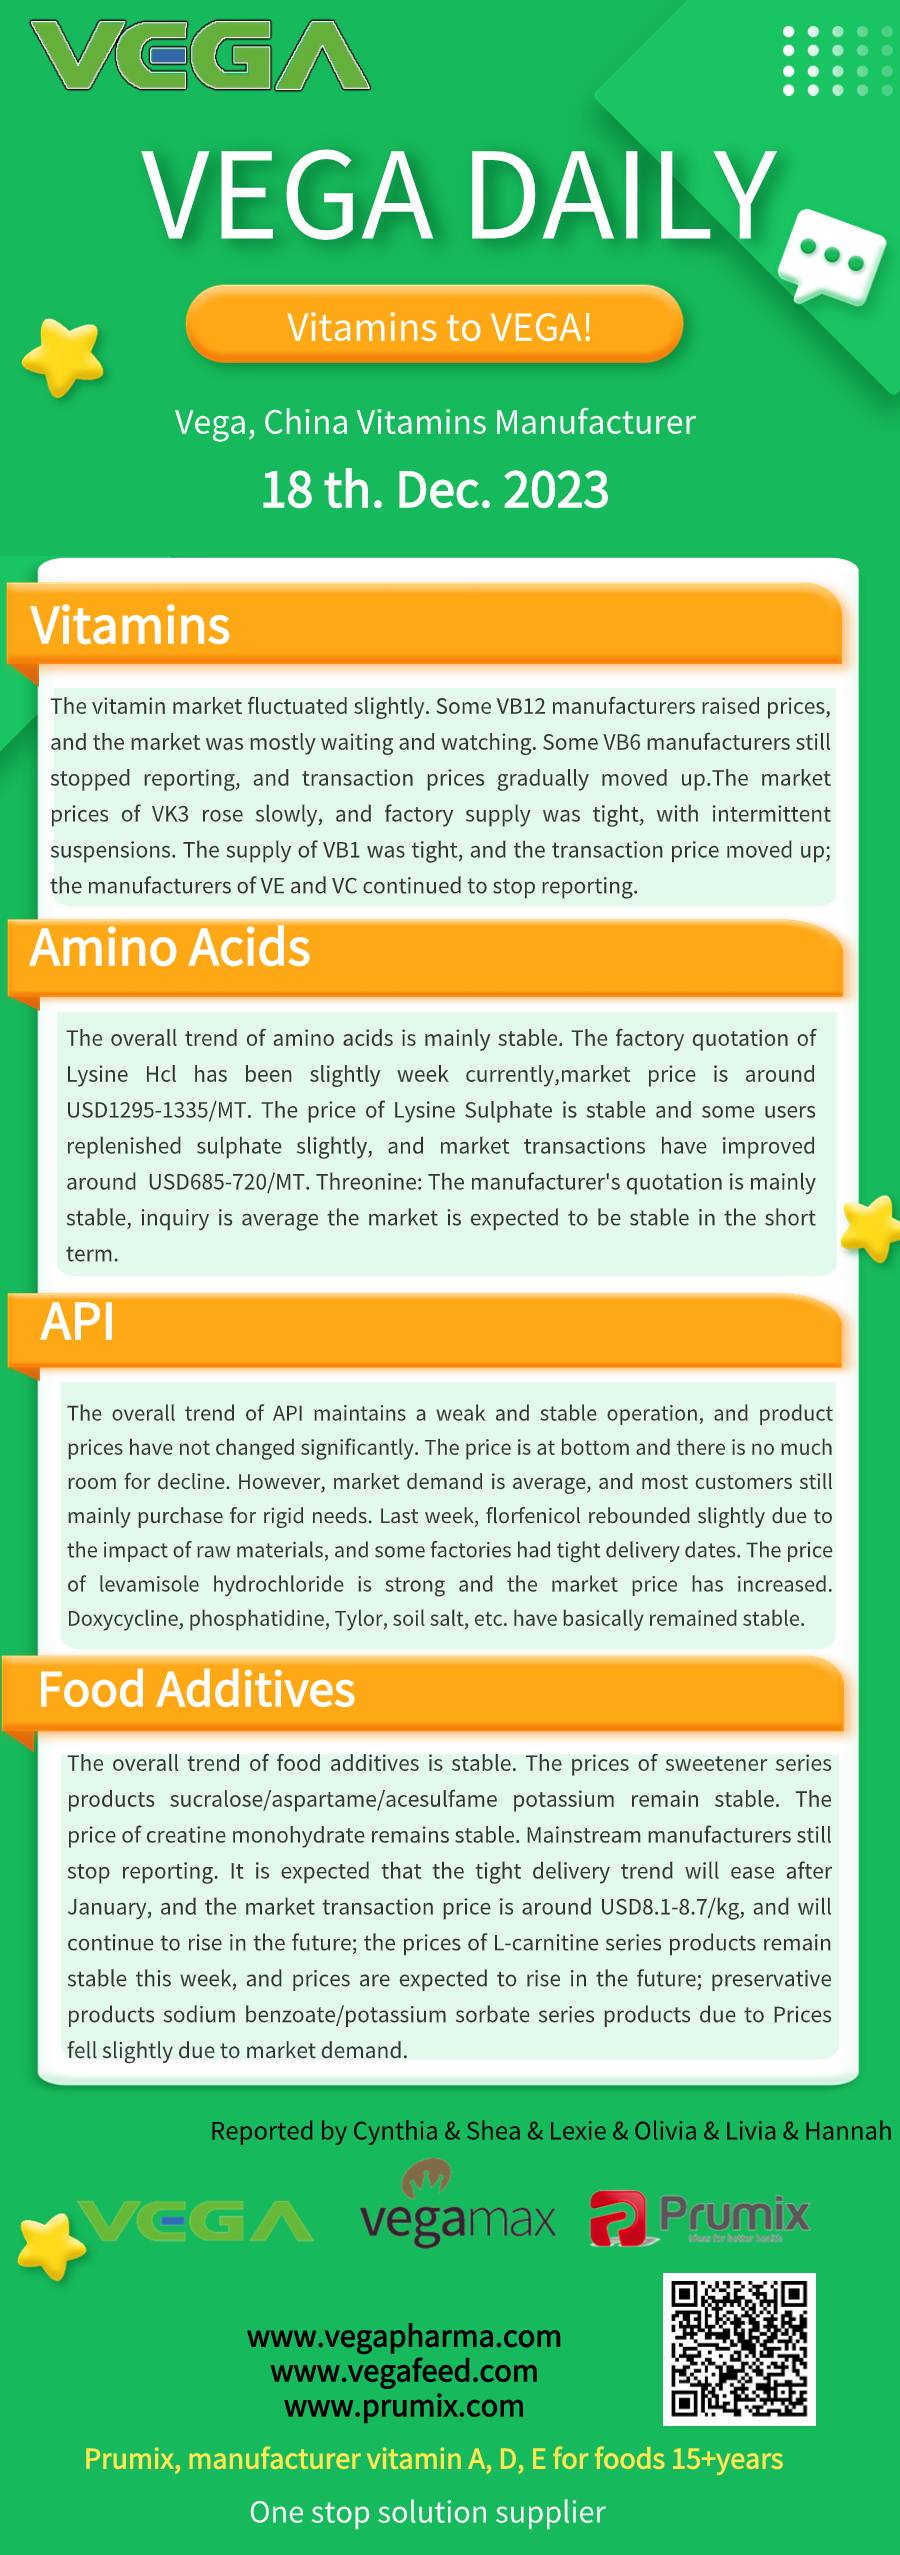 Vega Daily Dated on Dec 18th 2023 Vitamin Amino Acids APl Food Additives.jpg